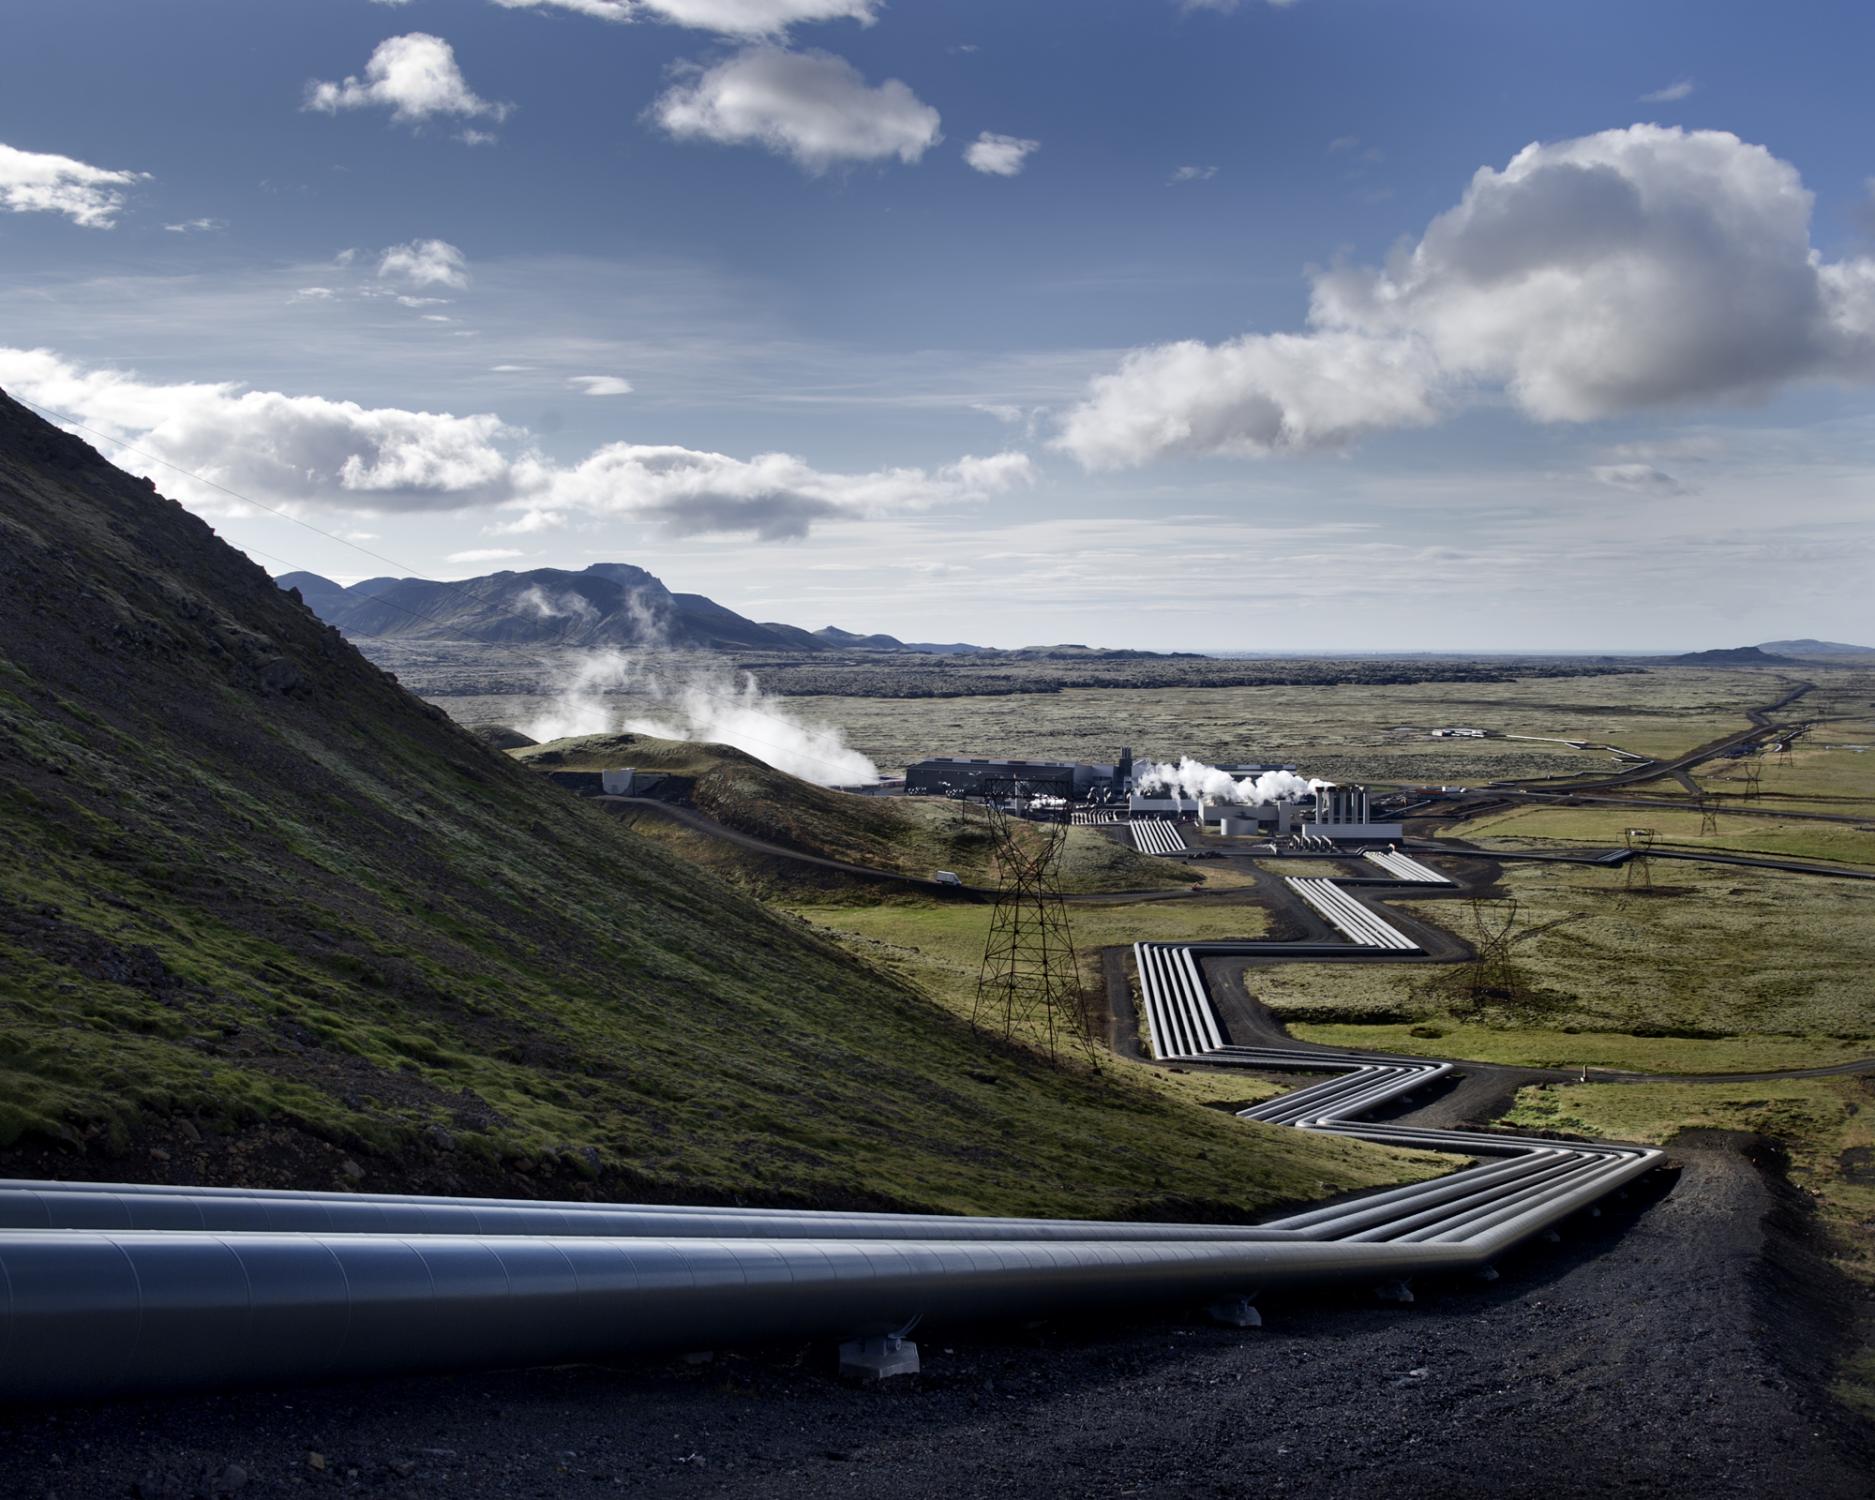 Steamland - Geothermal Power in Iceland.
August 2010.
Hengill,...